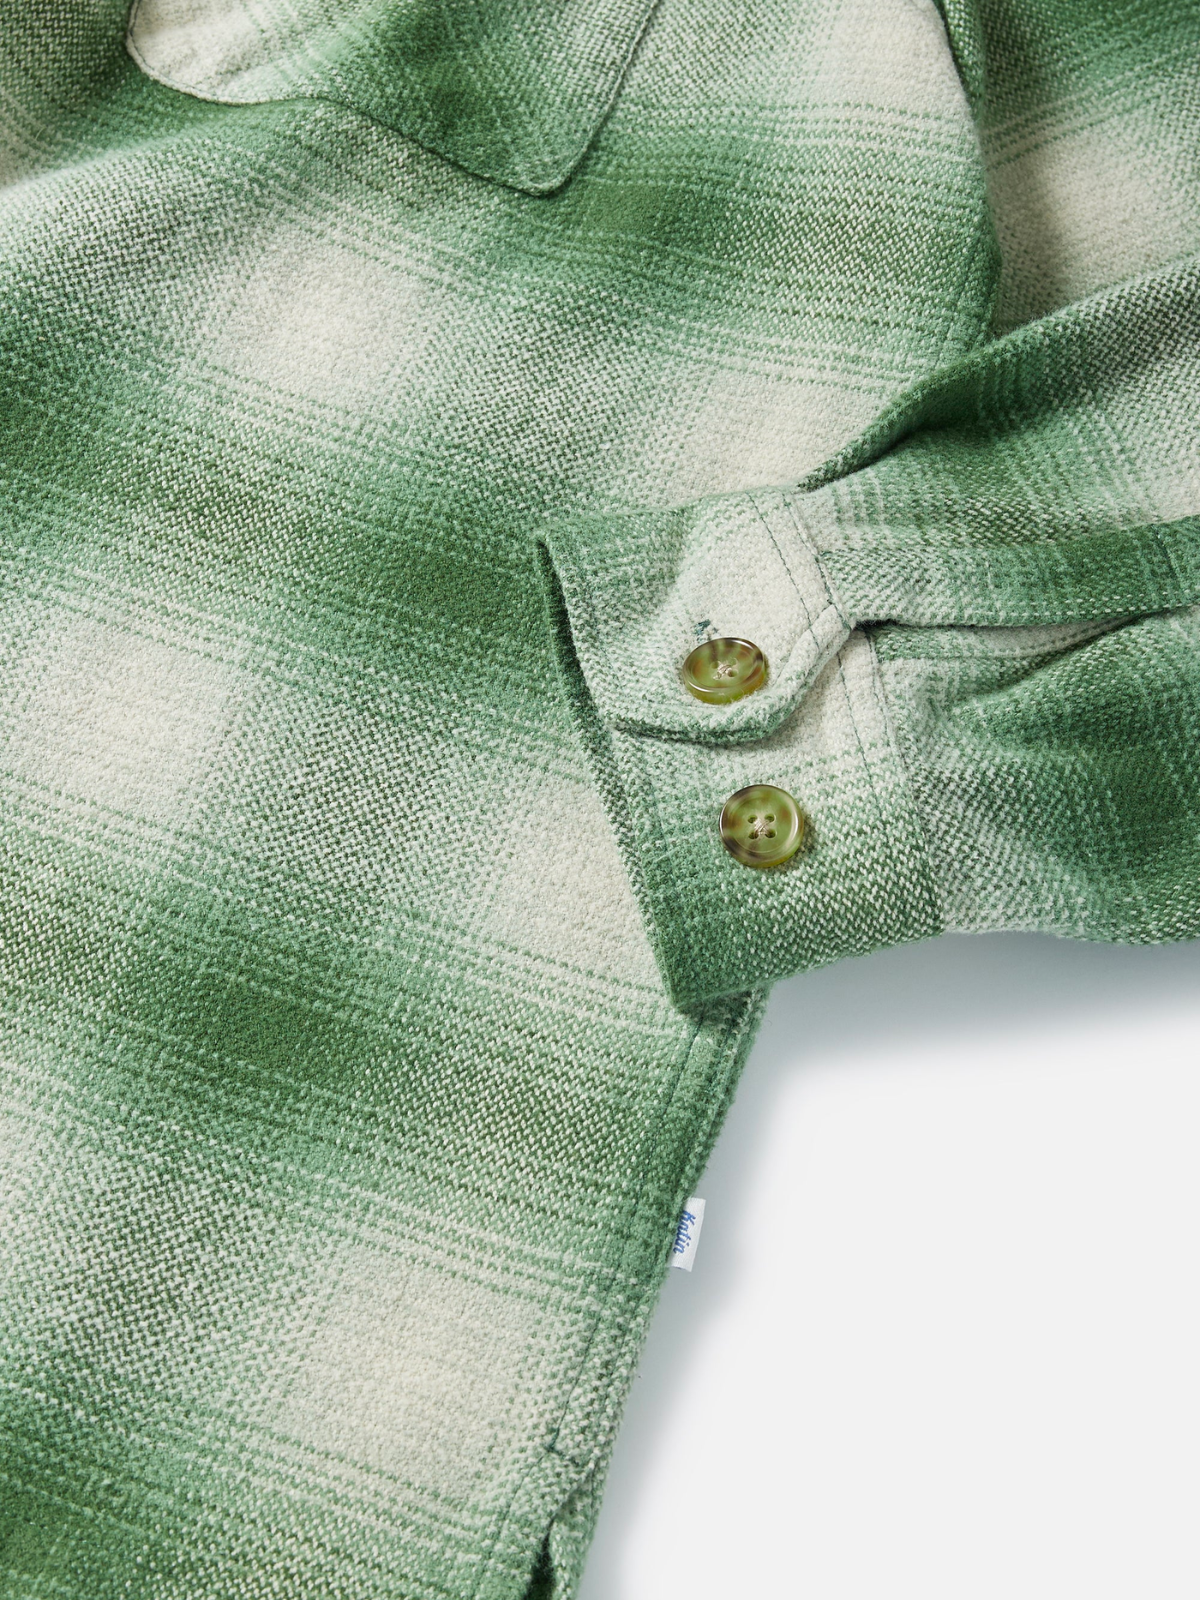 katin shiloh flannel pine green white faded plaid workwear style ls long sleeve shirt kempt athens ga georgia men's clothing store